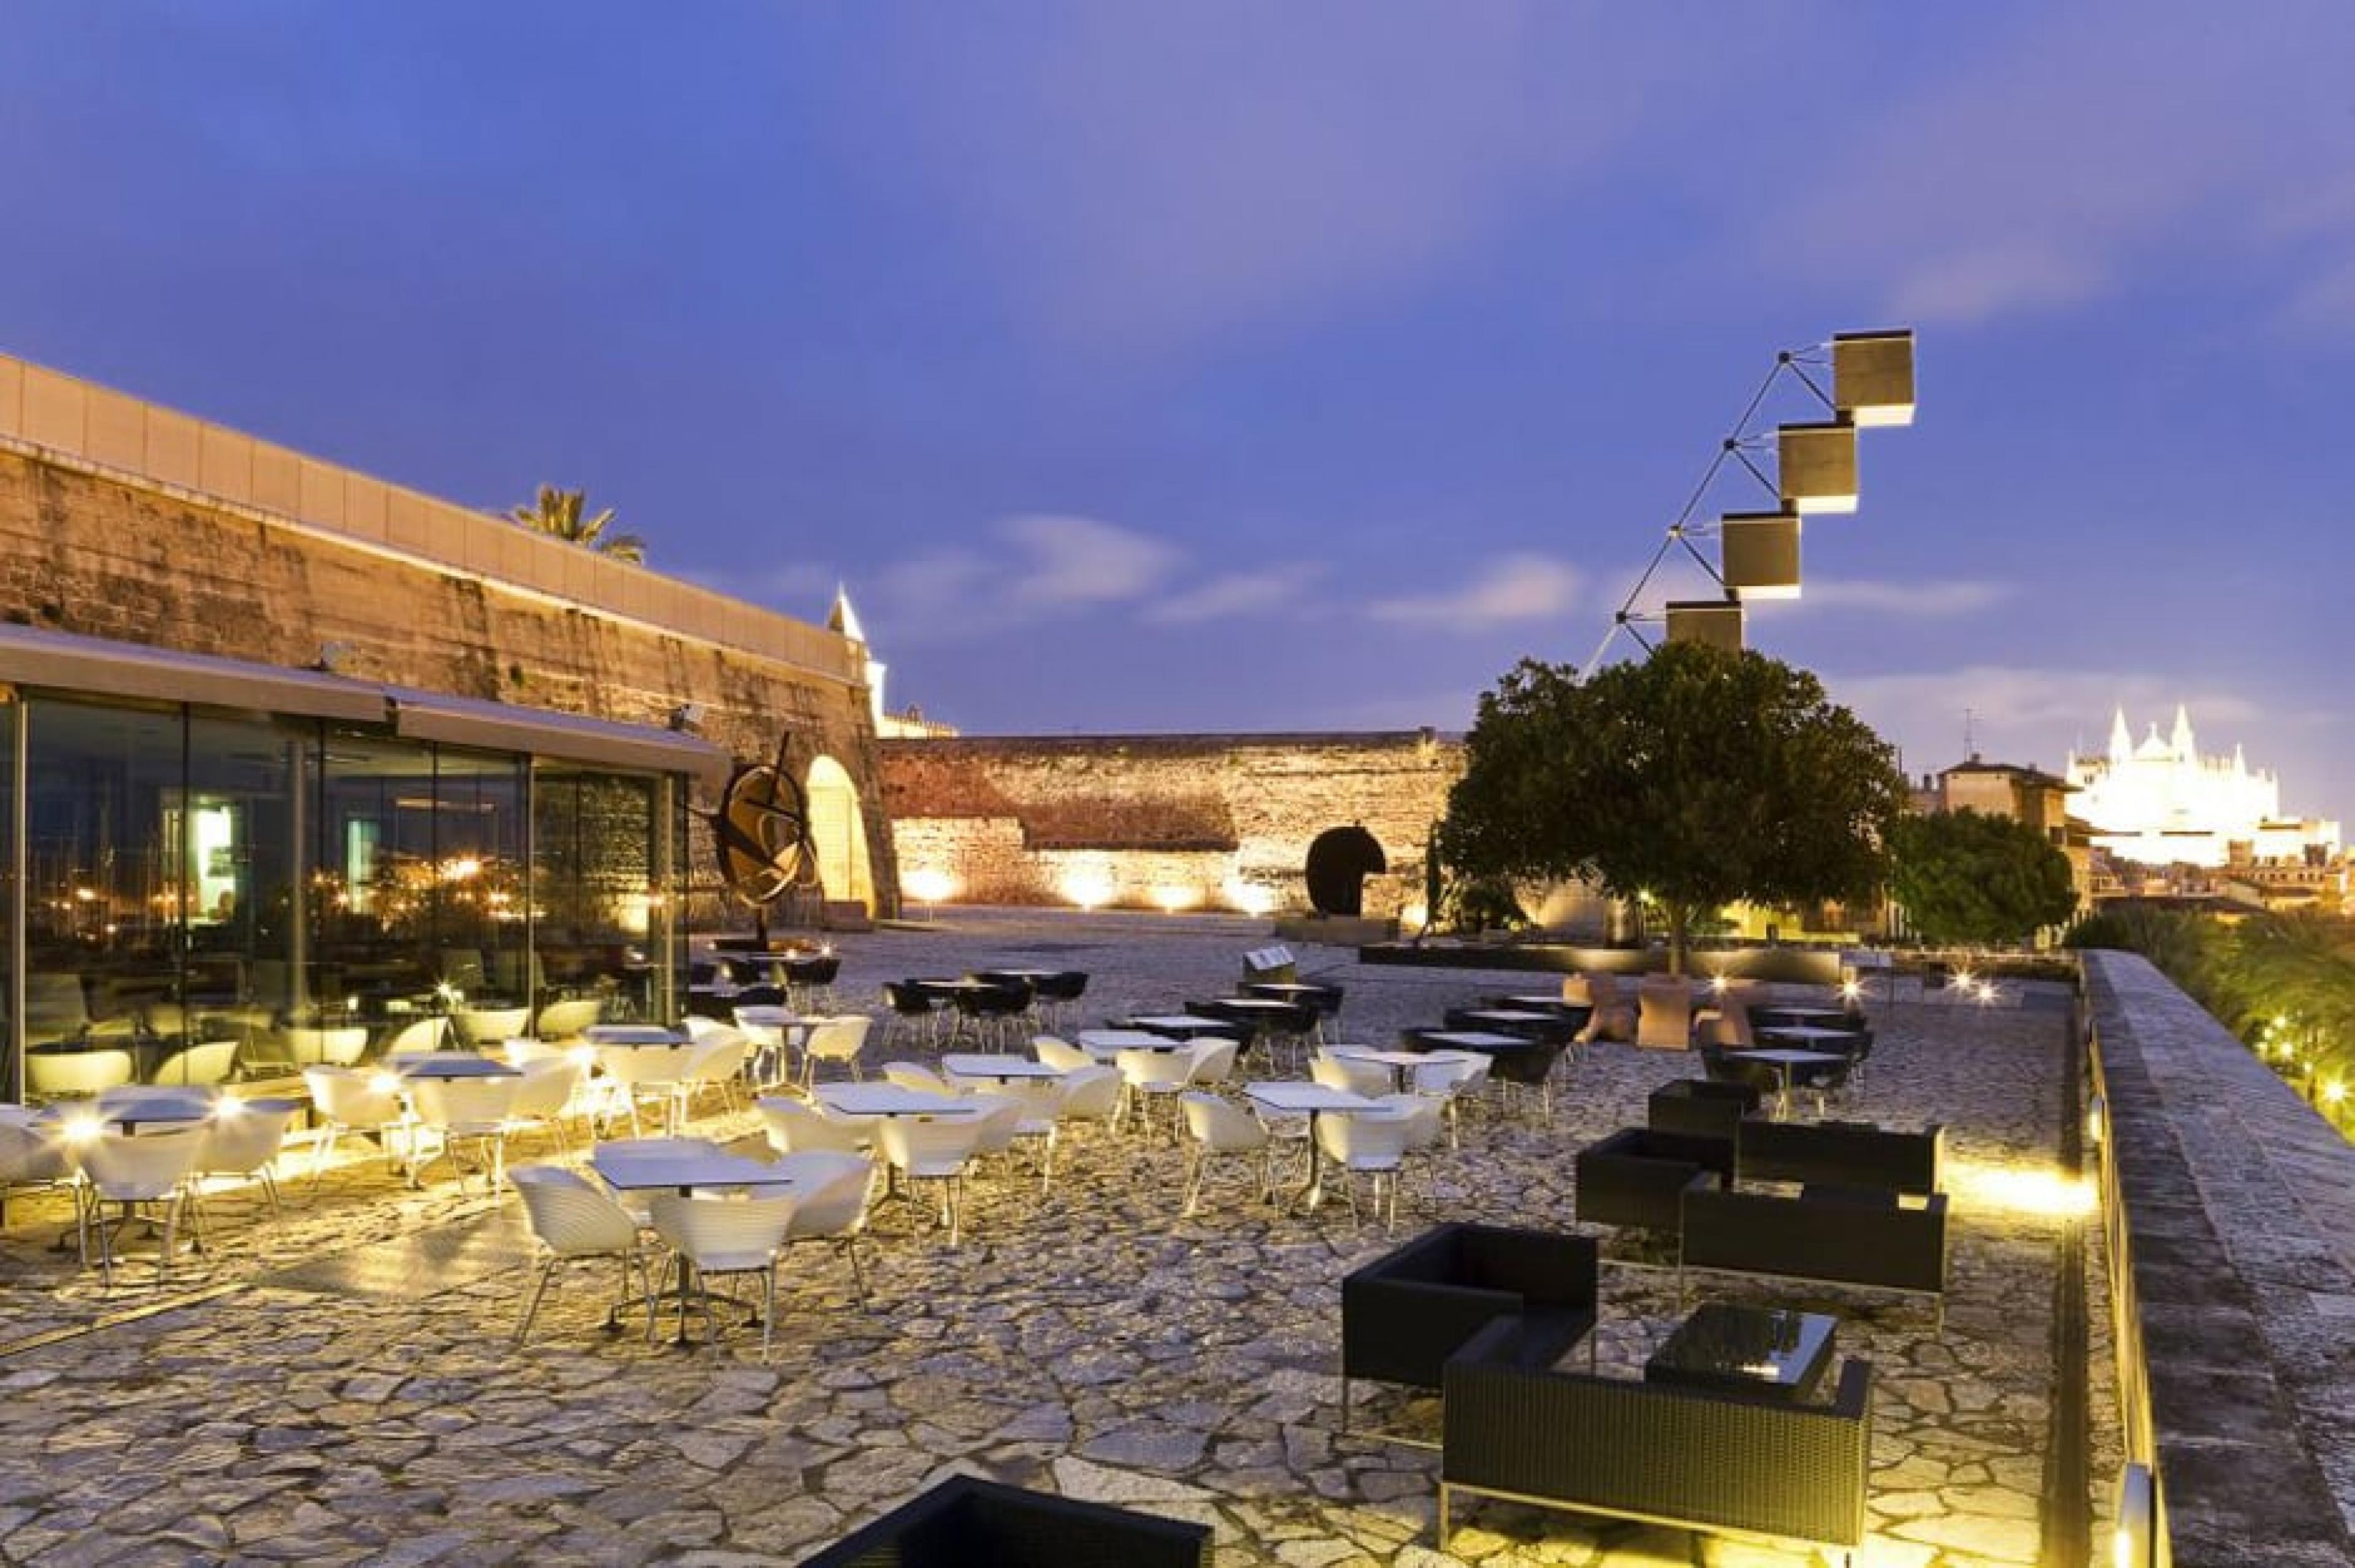 Outdoor dining - The Es Baluard’s Café-Restaurant, Mallorca, Spain